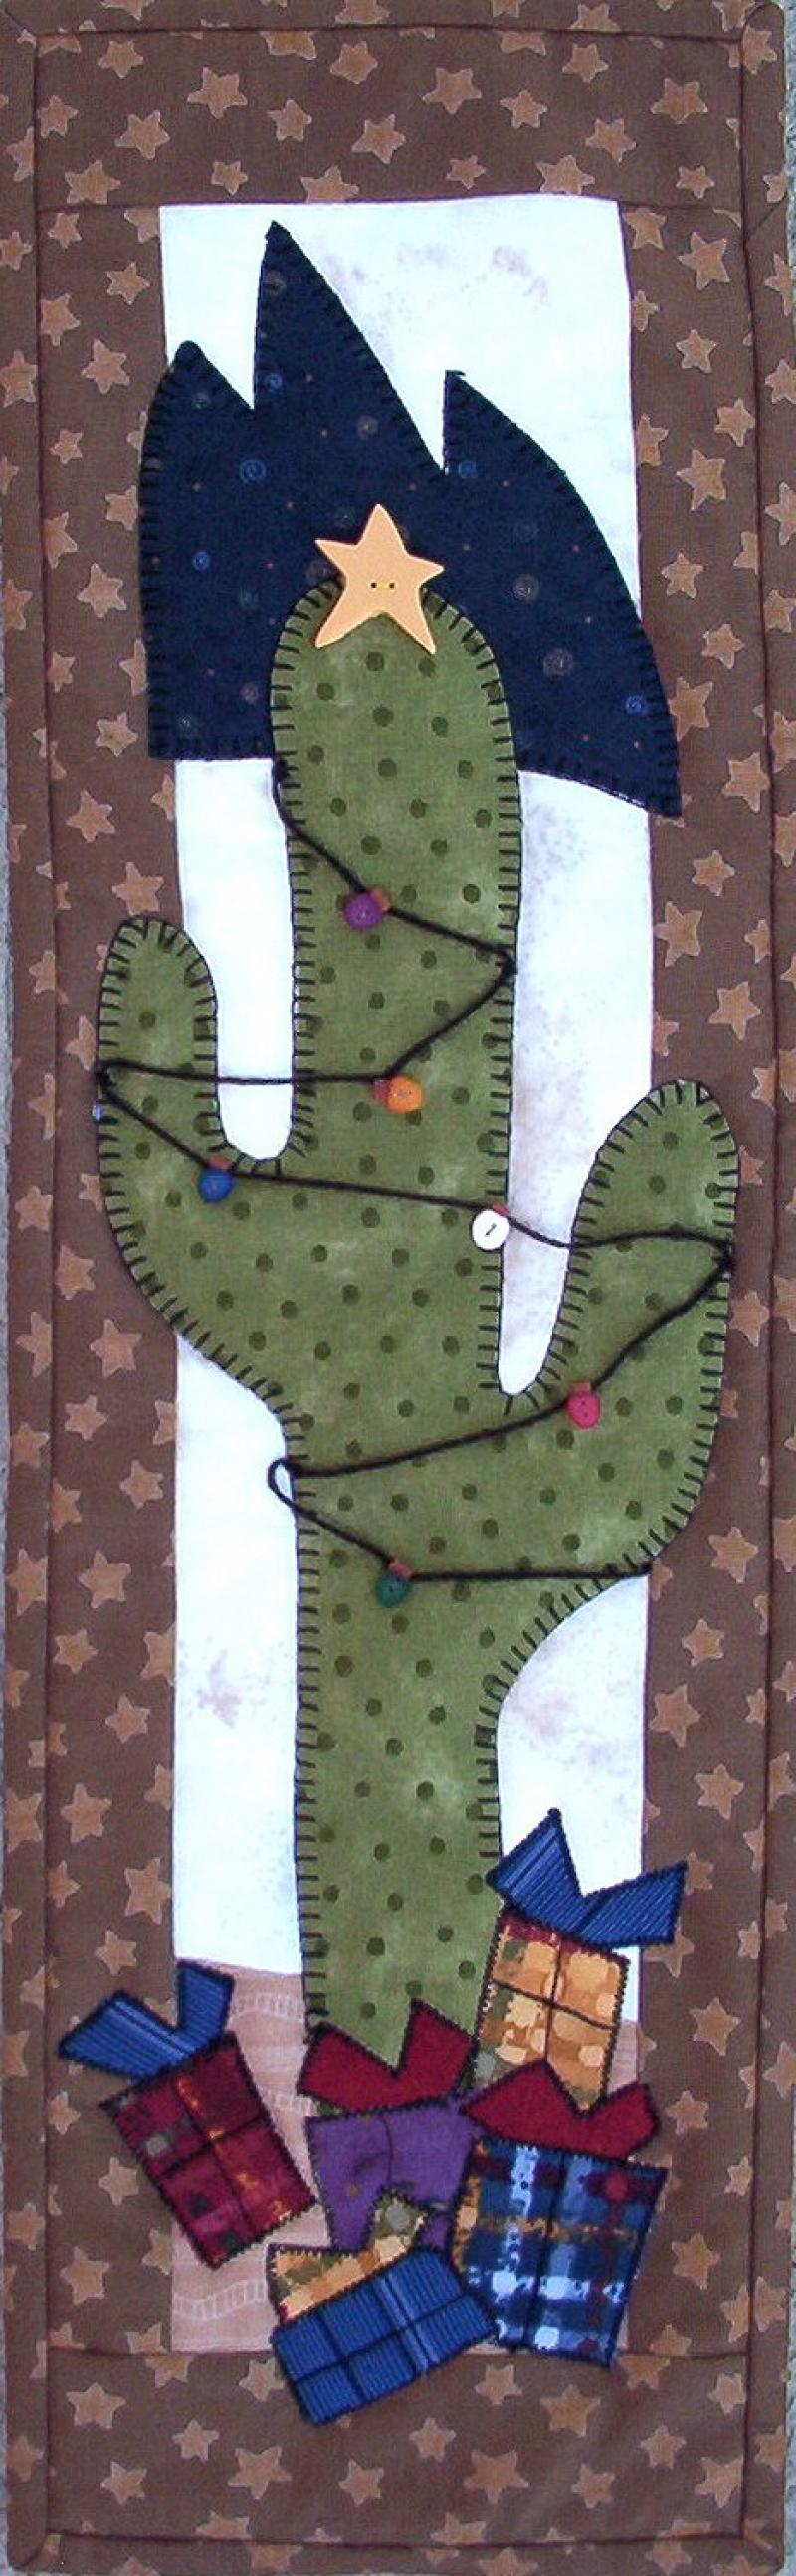 Patch Abilities - P55 Christmas Cactus